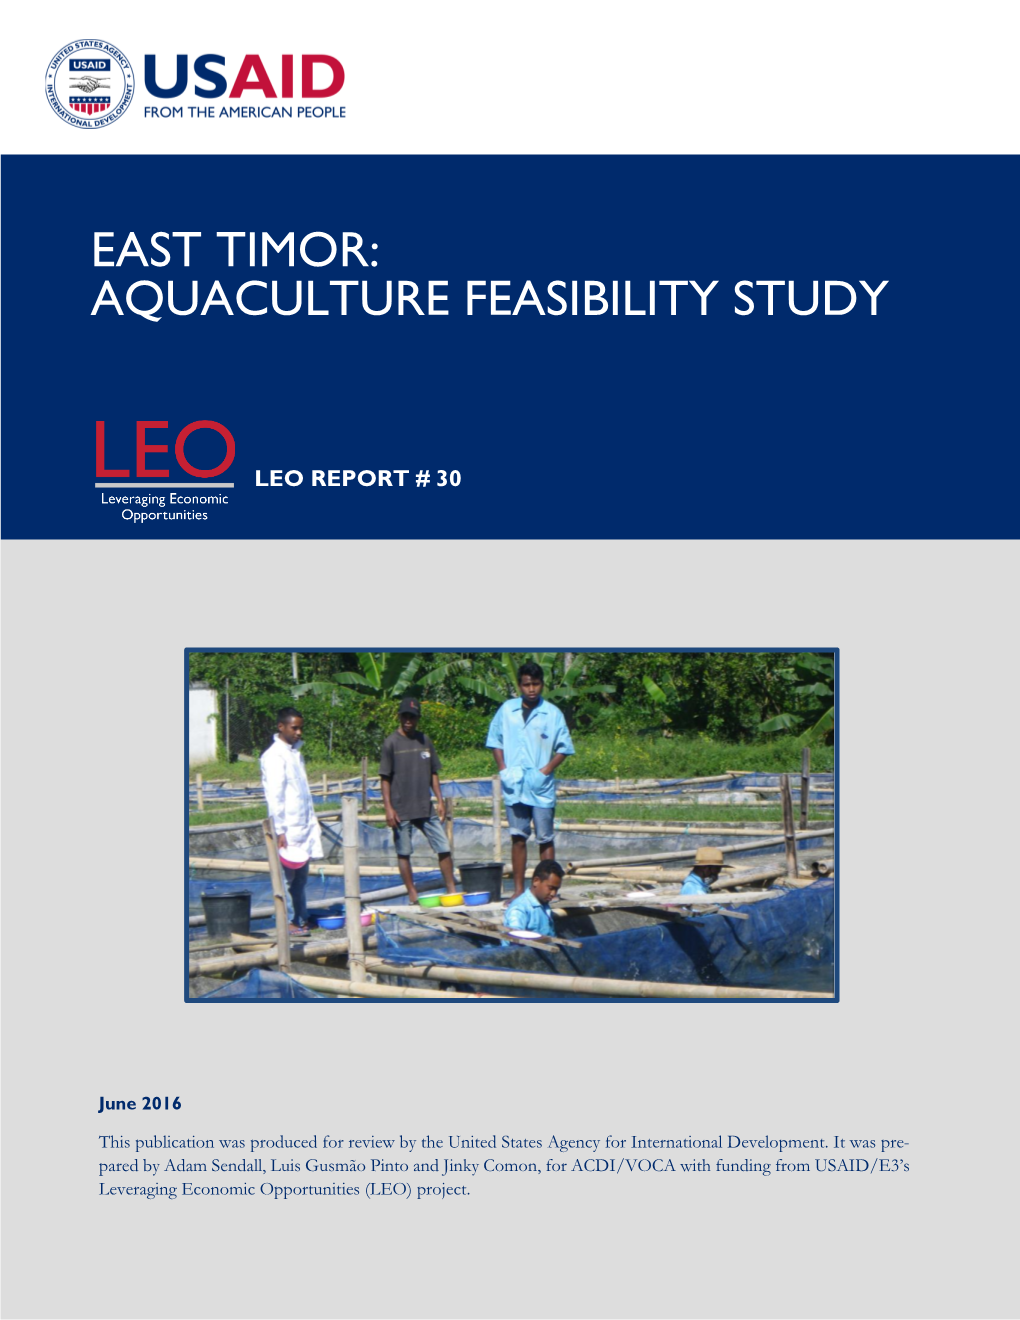 East Timor Aquaculture Feasibility Study